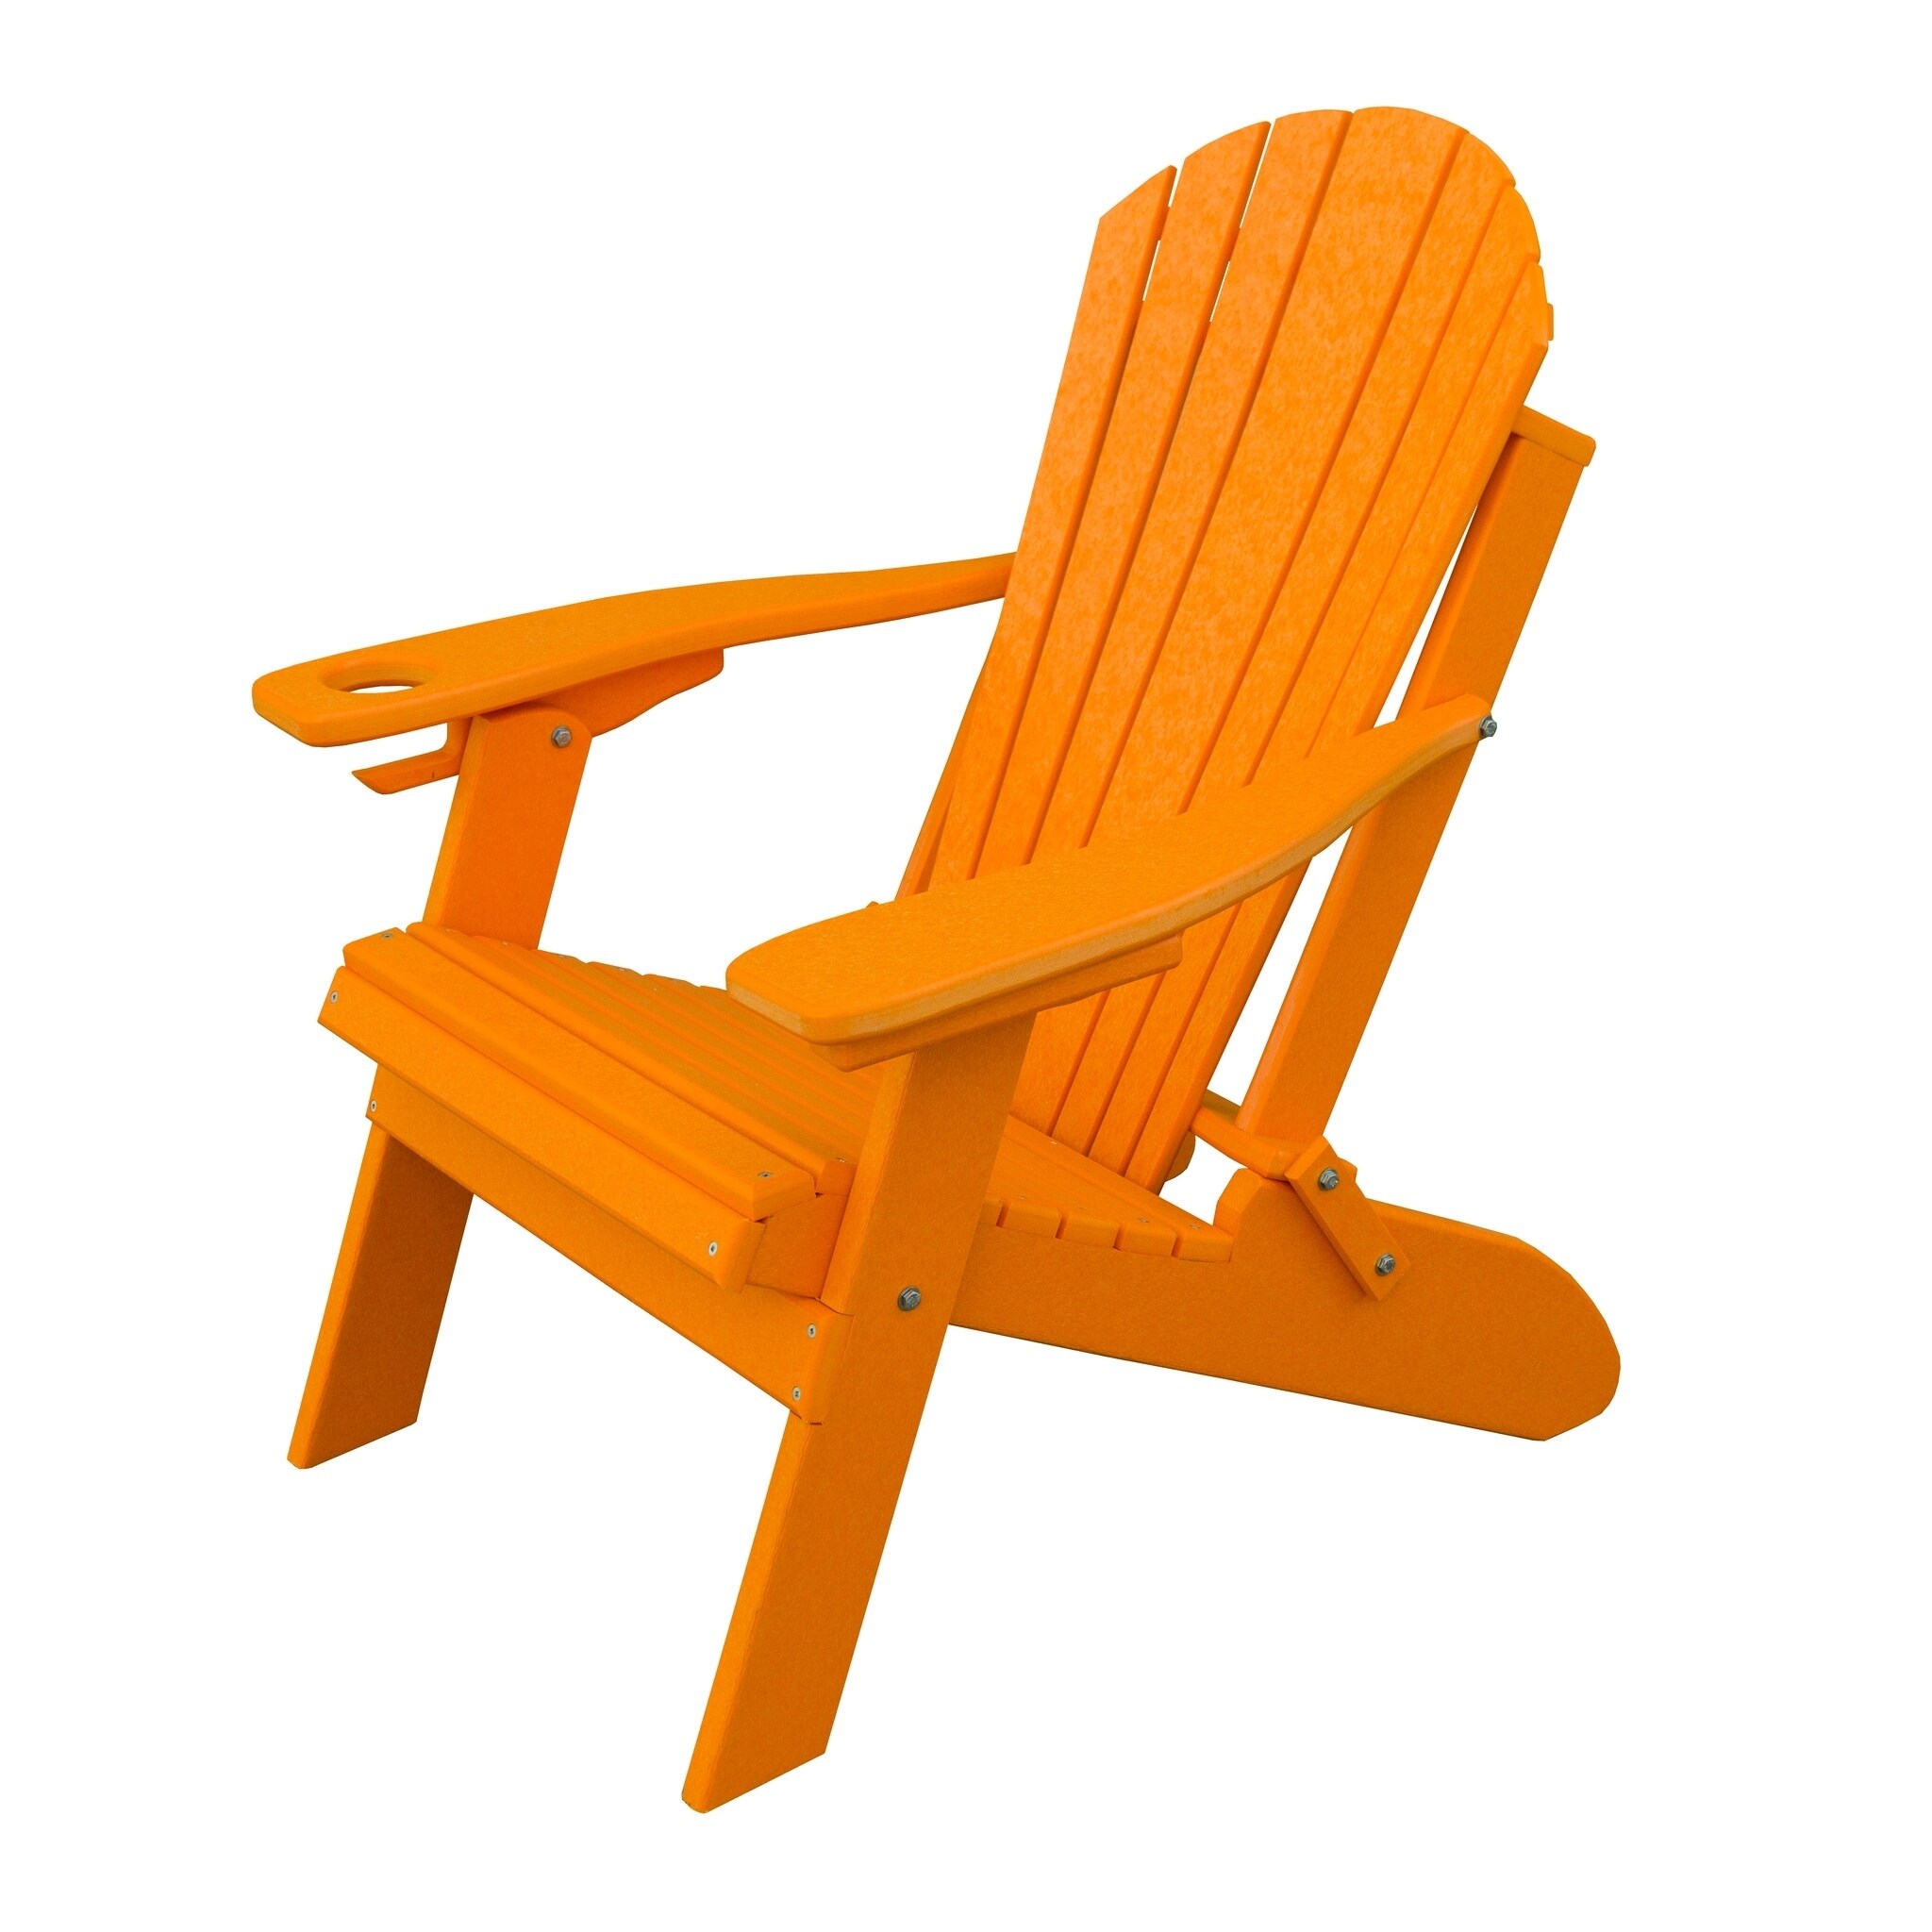 Folding Adirondack Chair W Cup Holder And Smart Phone Holder 63f178b9 3e90 42c8 B2be 20b23f722b88 